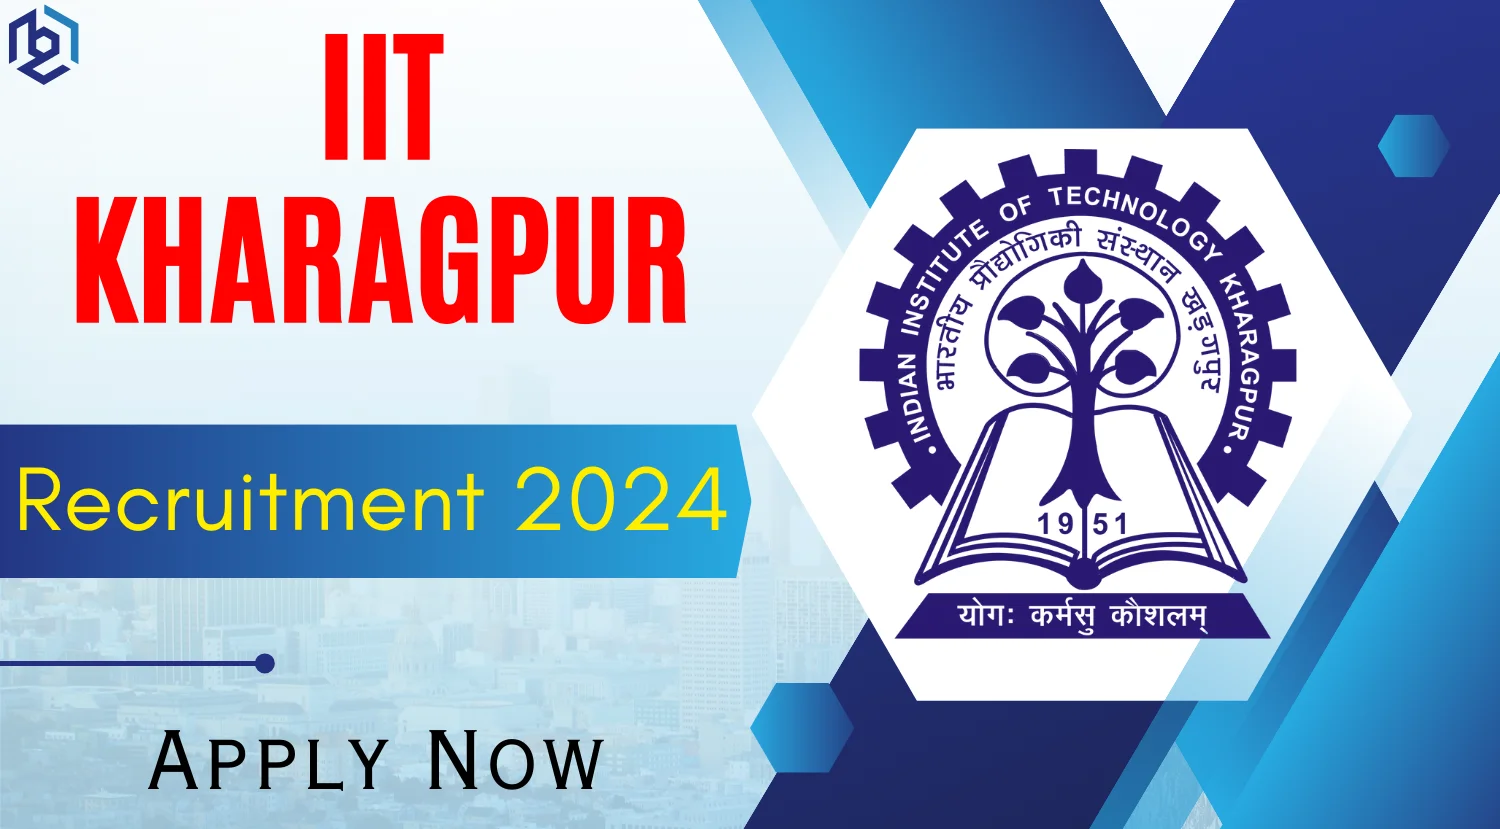 IIT Kharagpur Research Investigator Recruitment 2024